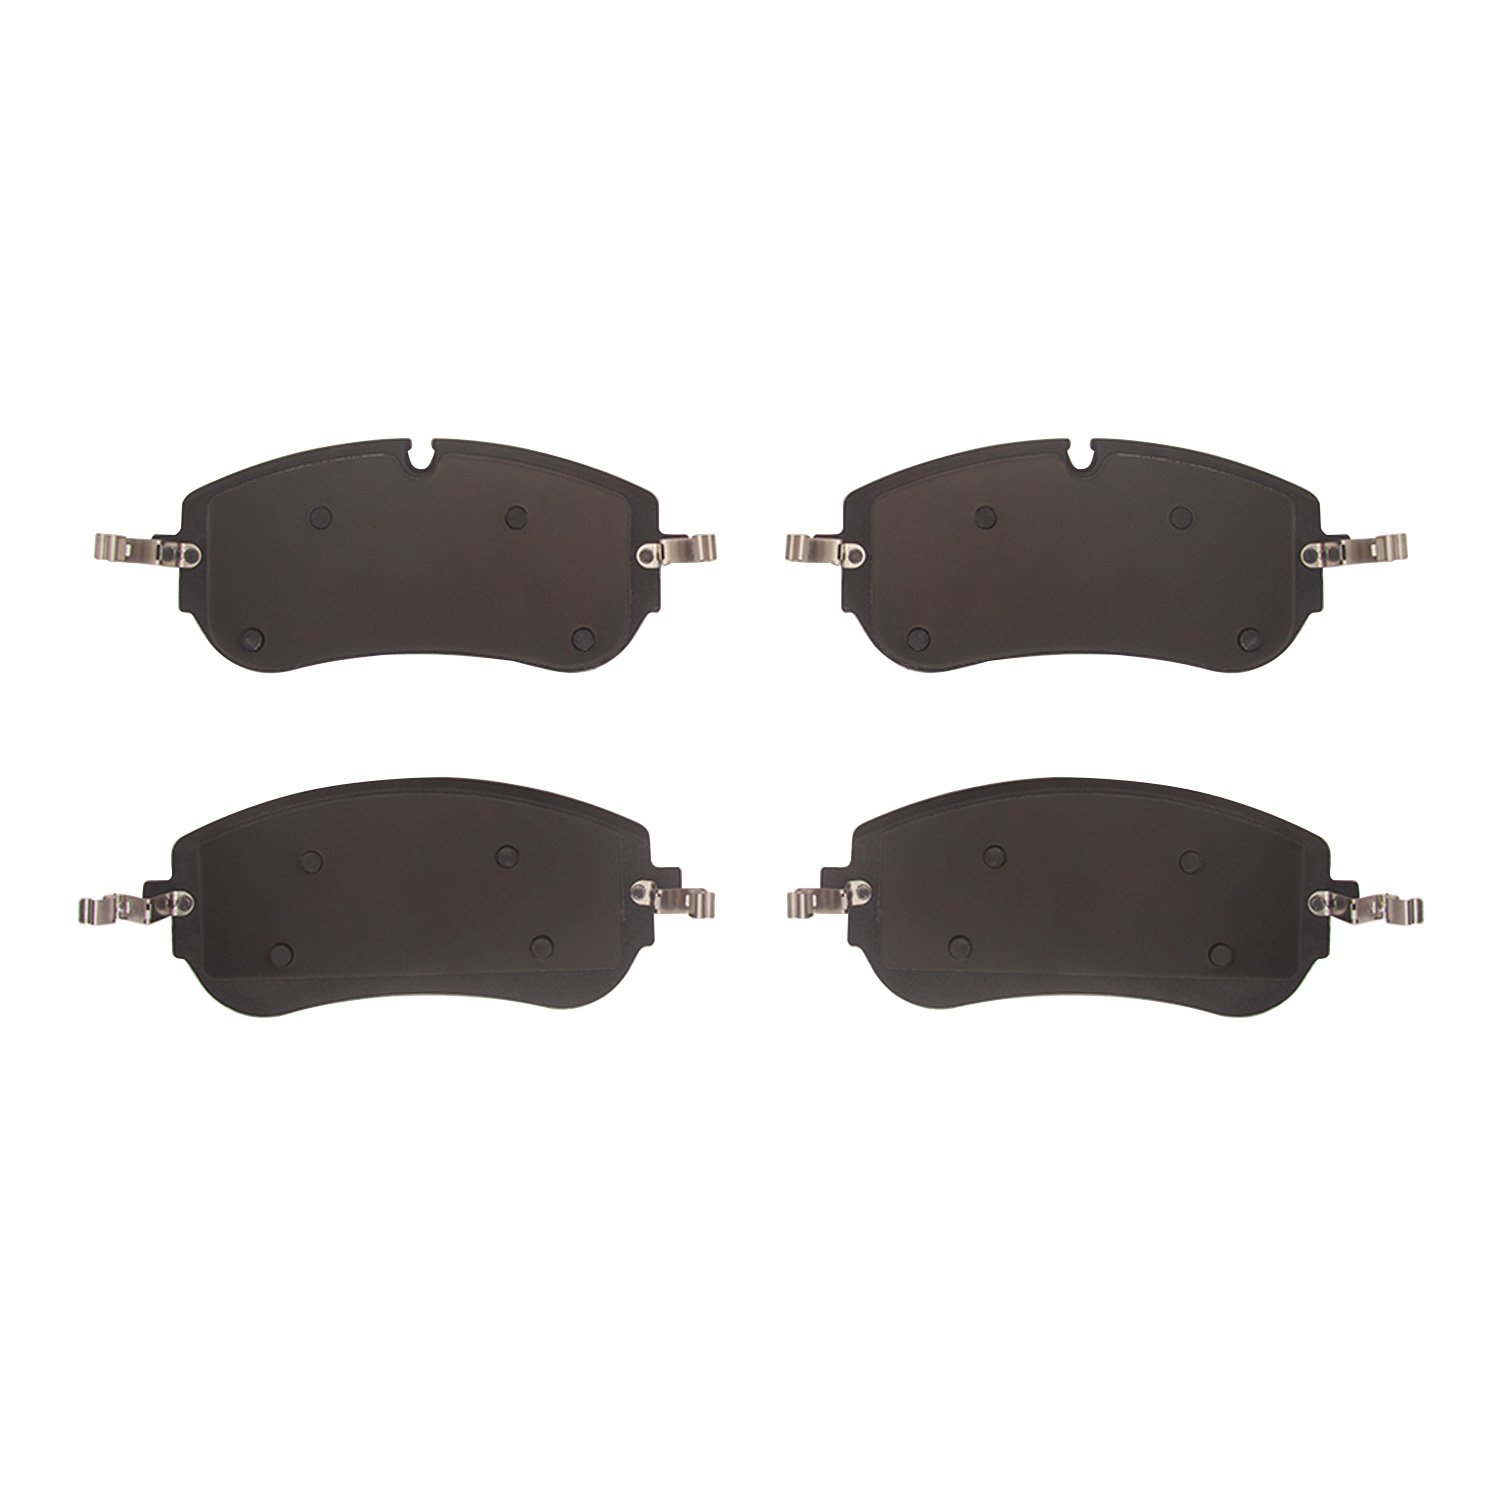 1551-2416-00 5000 Advanced Ceramic Brake Pads, Fits Select Multiple Makes/Models, Position: Front